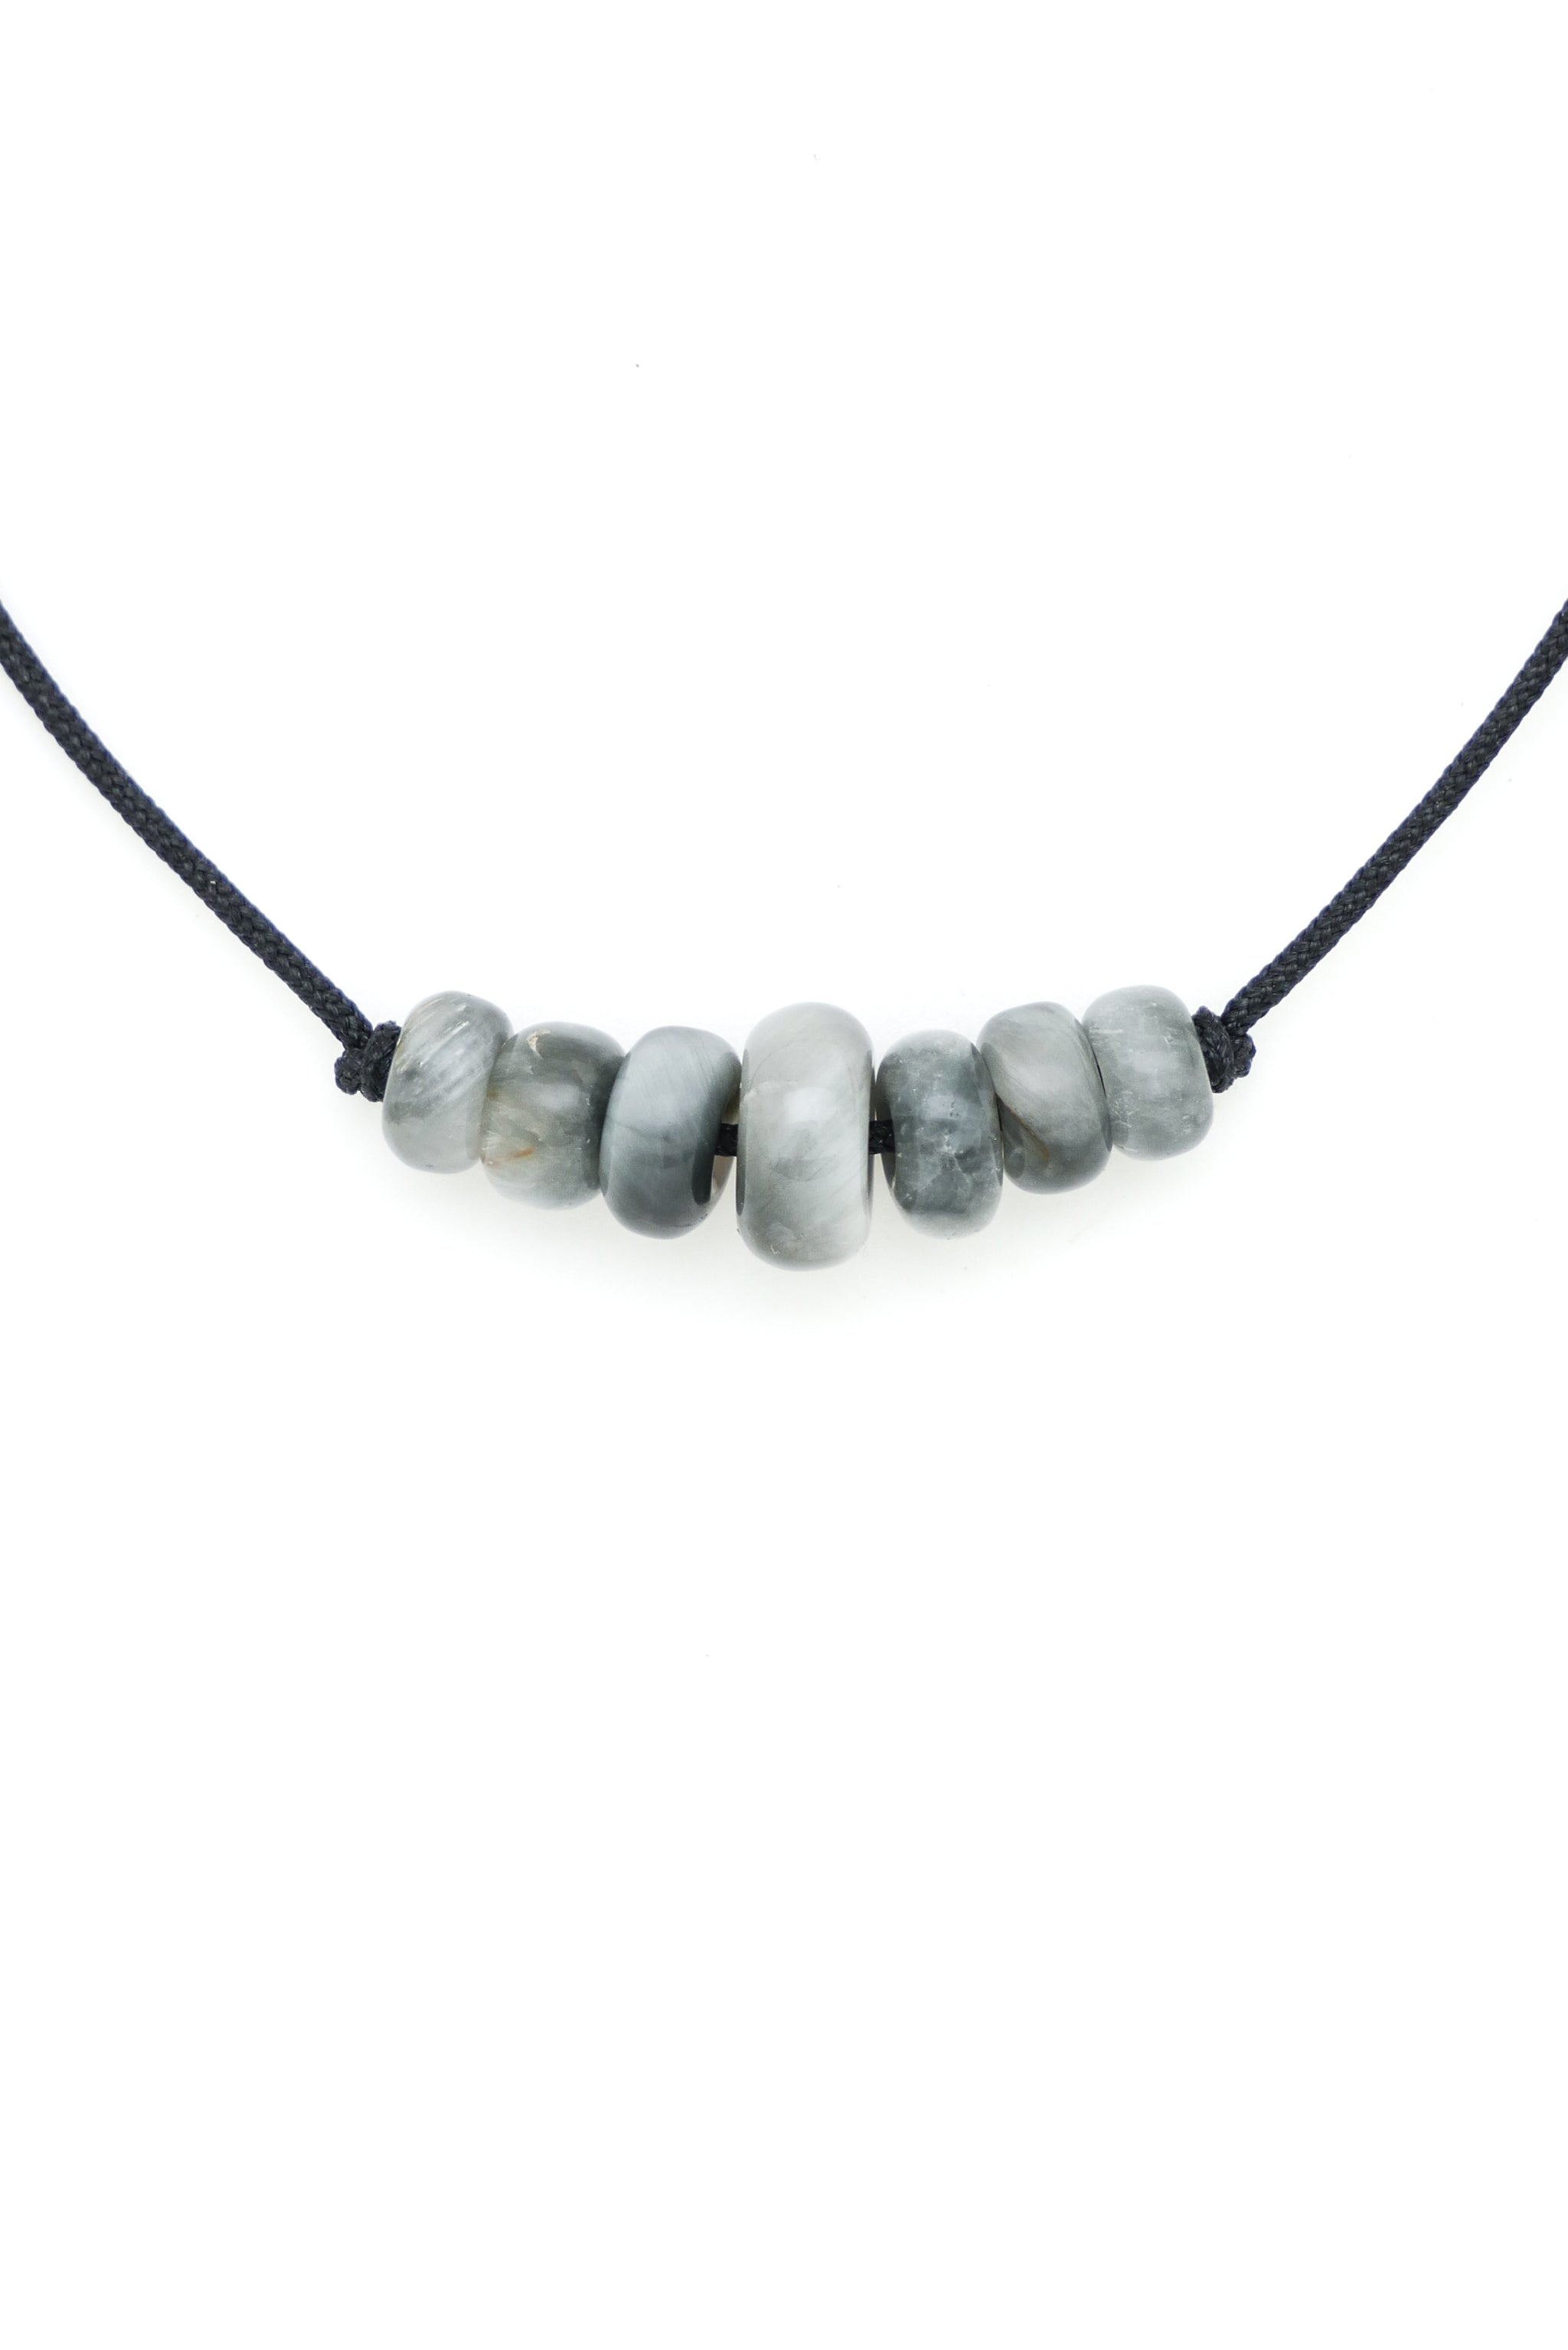 Wholesale Love Beaded Necklace for Teen Girl Women - Pandahall.com